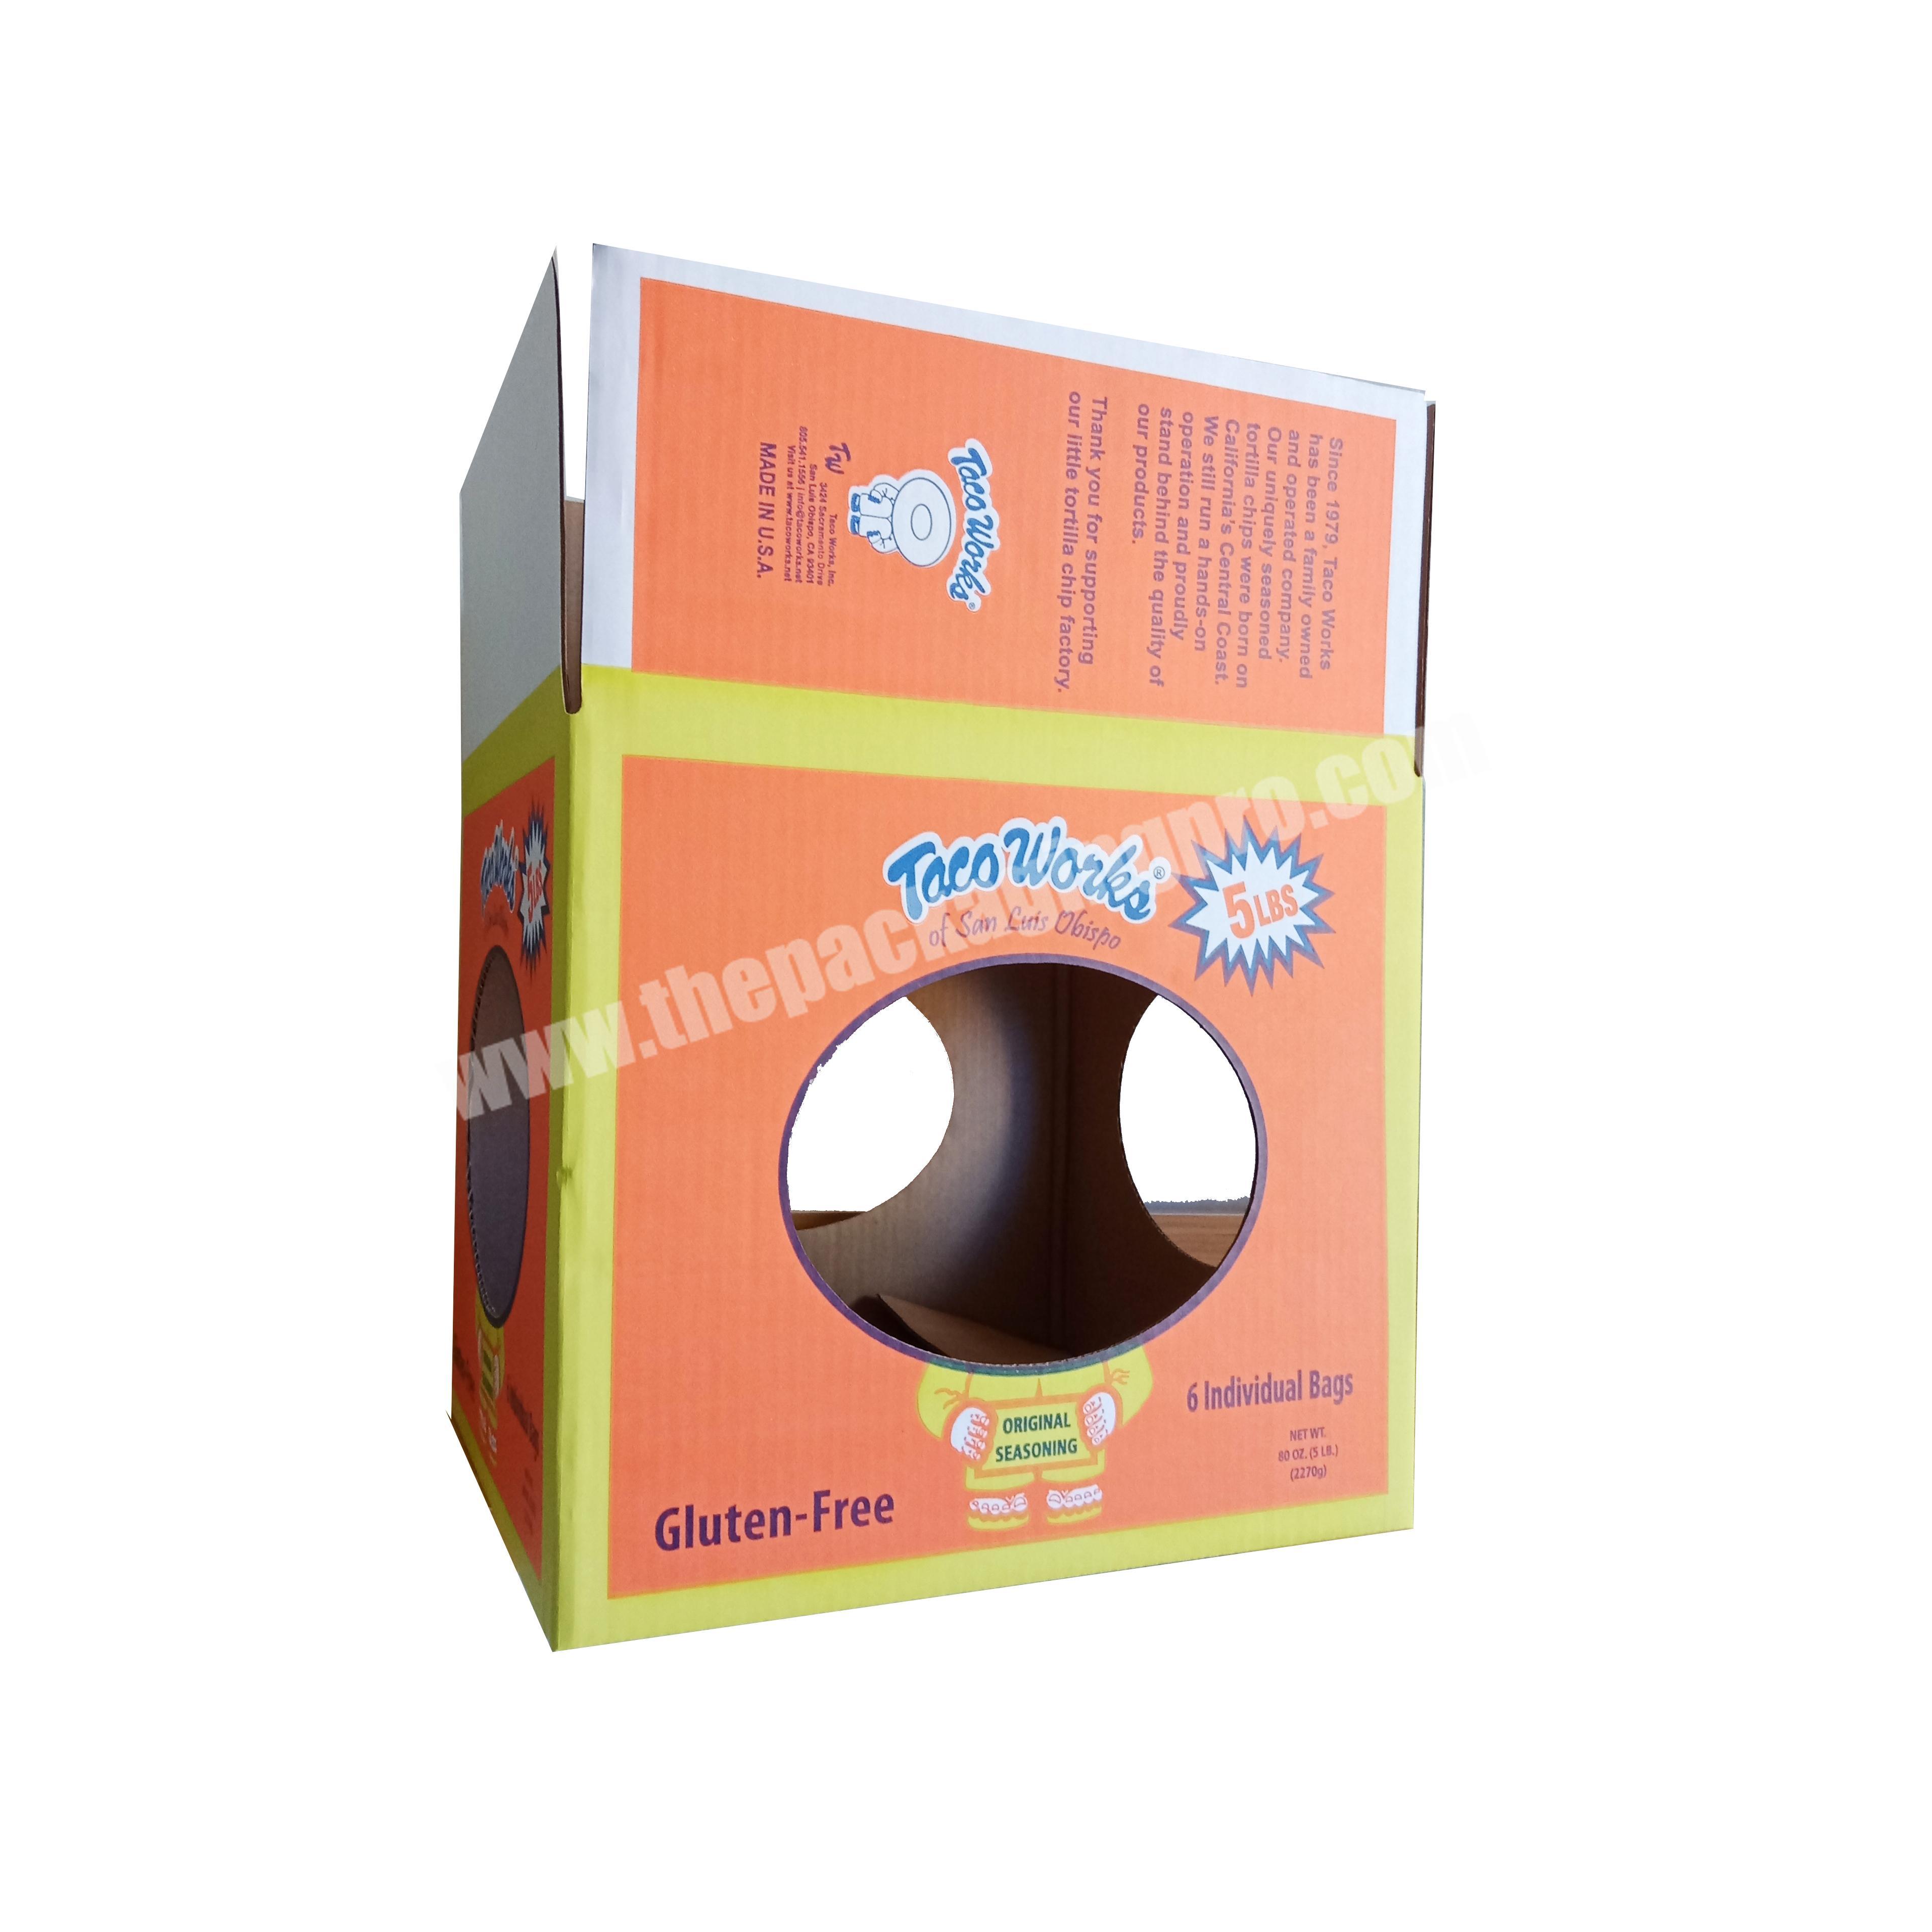 Kexin mailer creative sale of egg carton box custom size eco shipping boxes custom printing boxes with logo